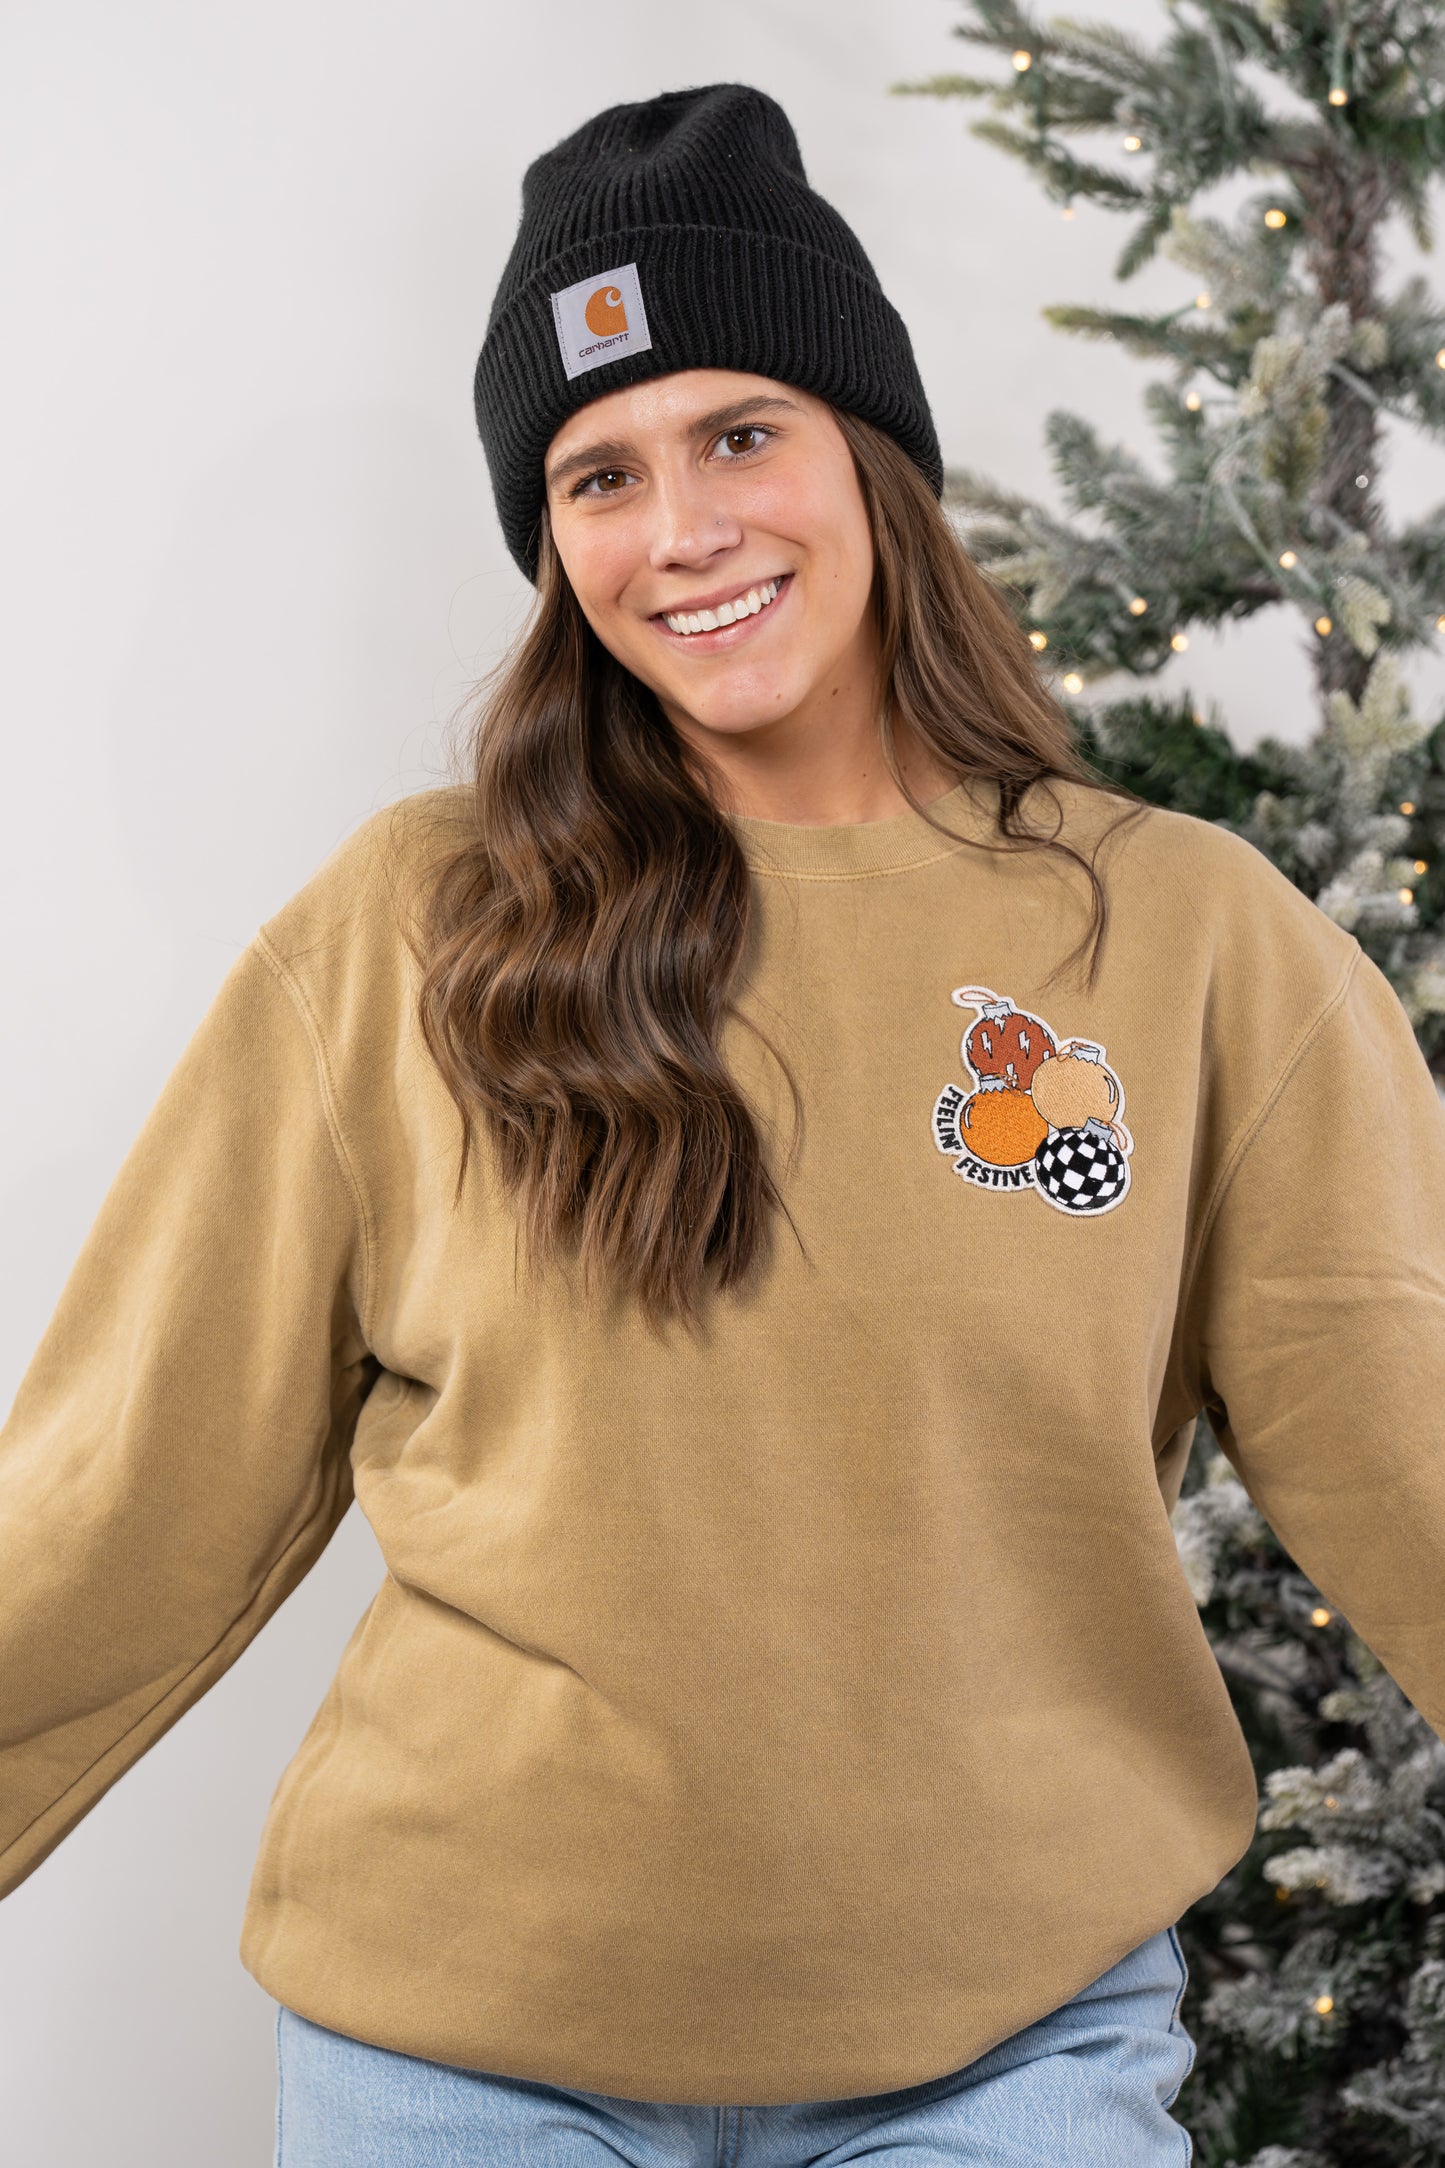 Rockin' Christmas Feelin' Festive - Embroidered Sweatshirt (Tan)